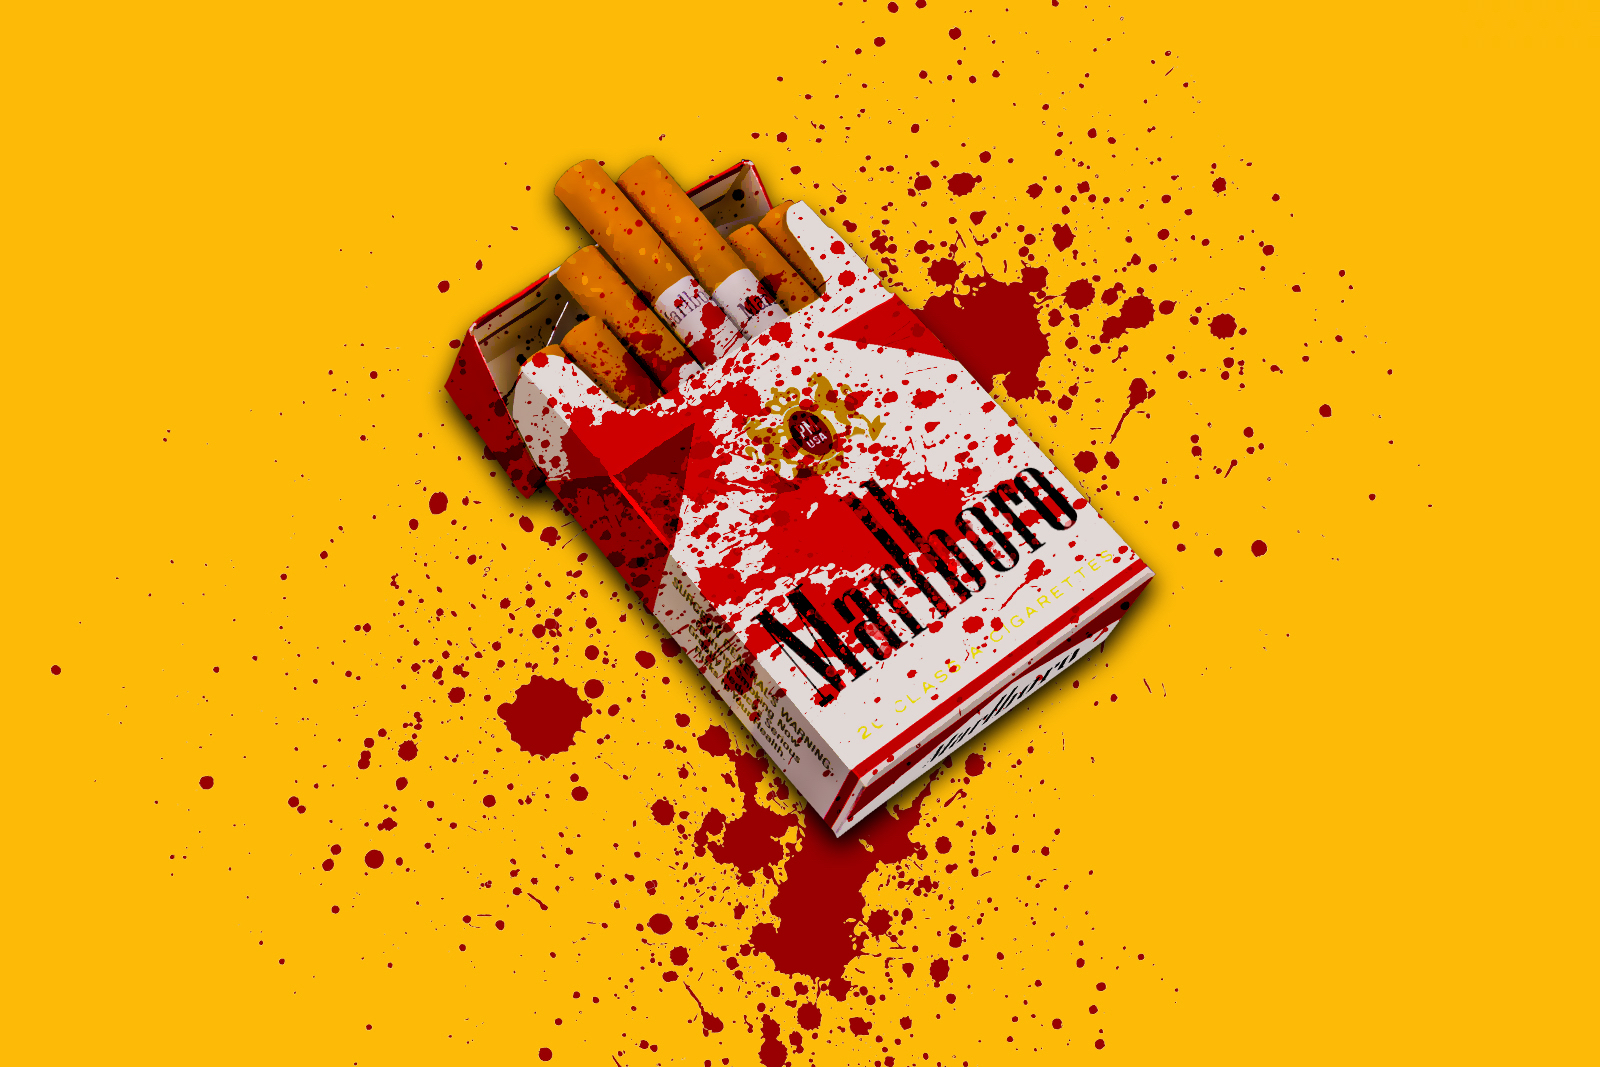 Marlboro pack of cigarettes